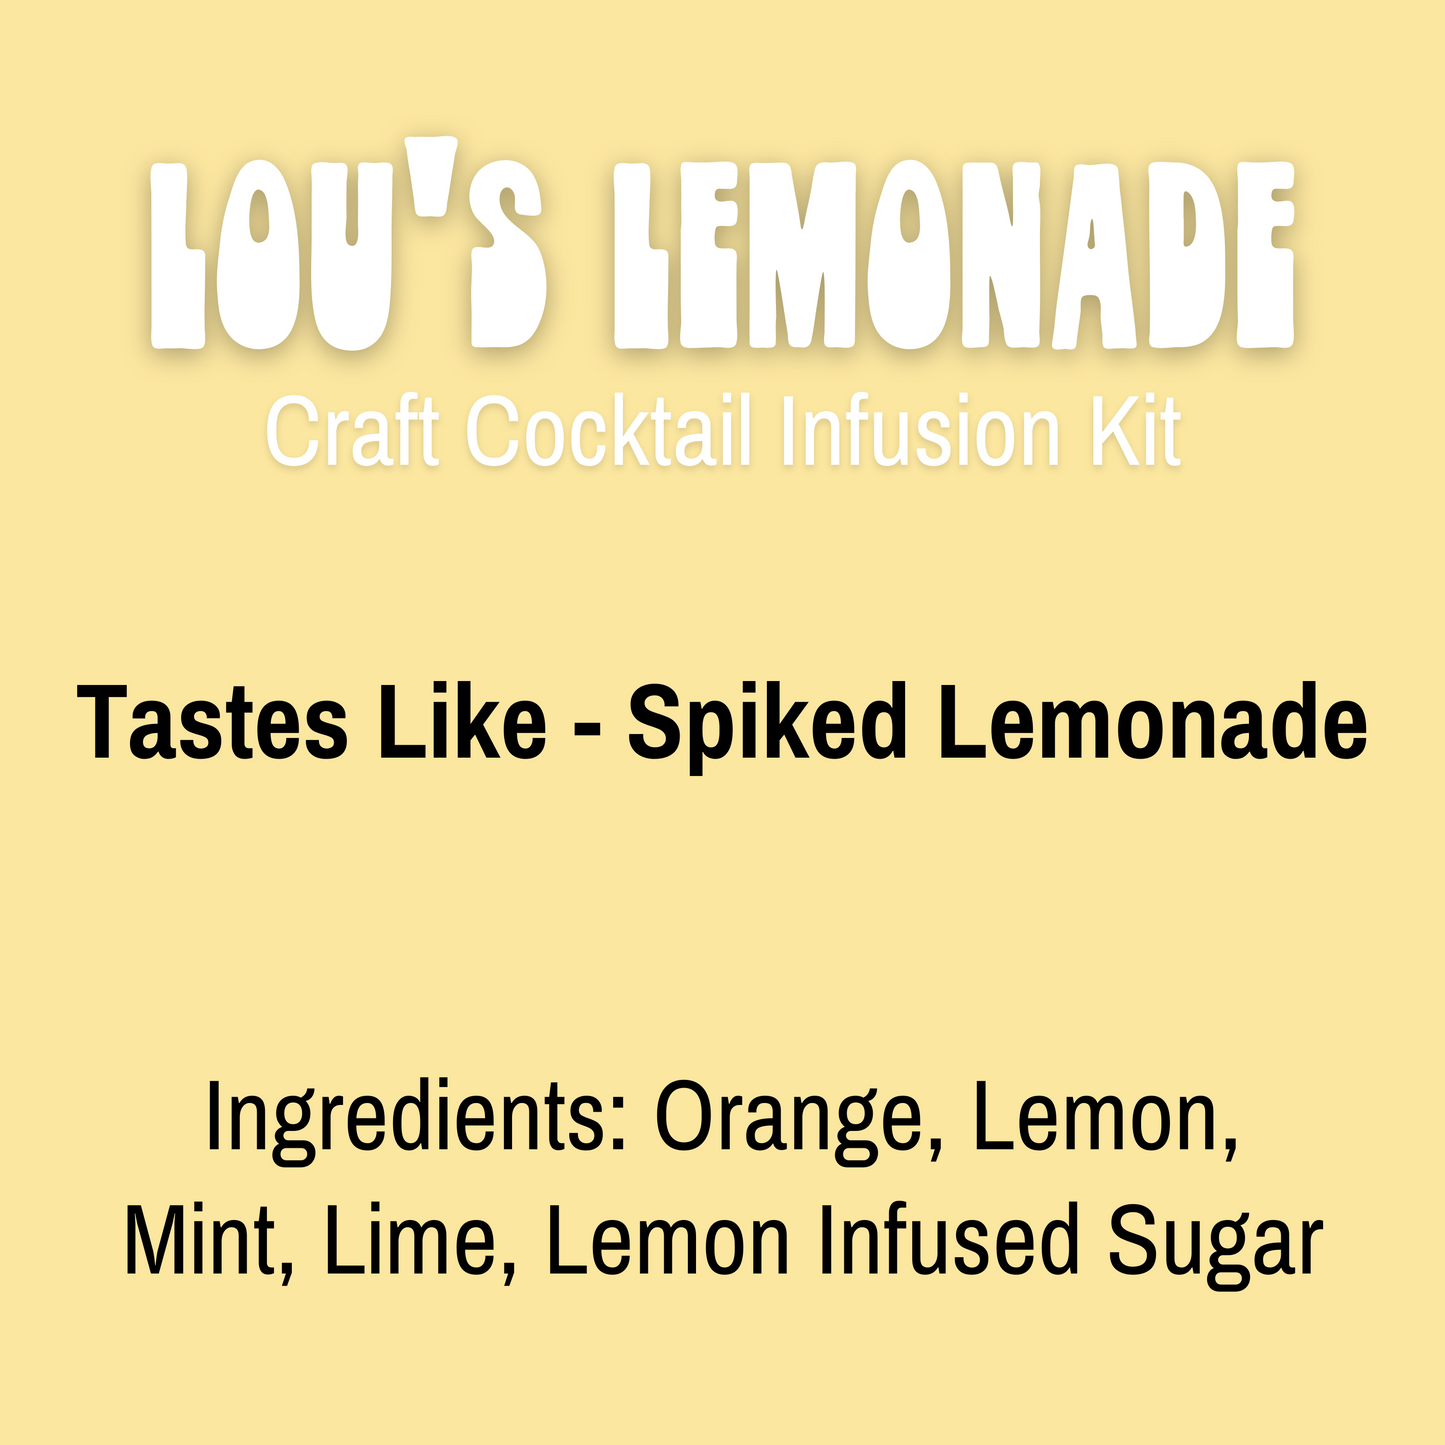 Lou's Lemonade Craft Cocktail Infusion Kit